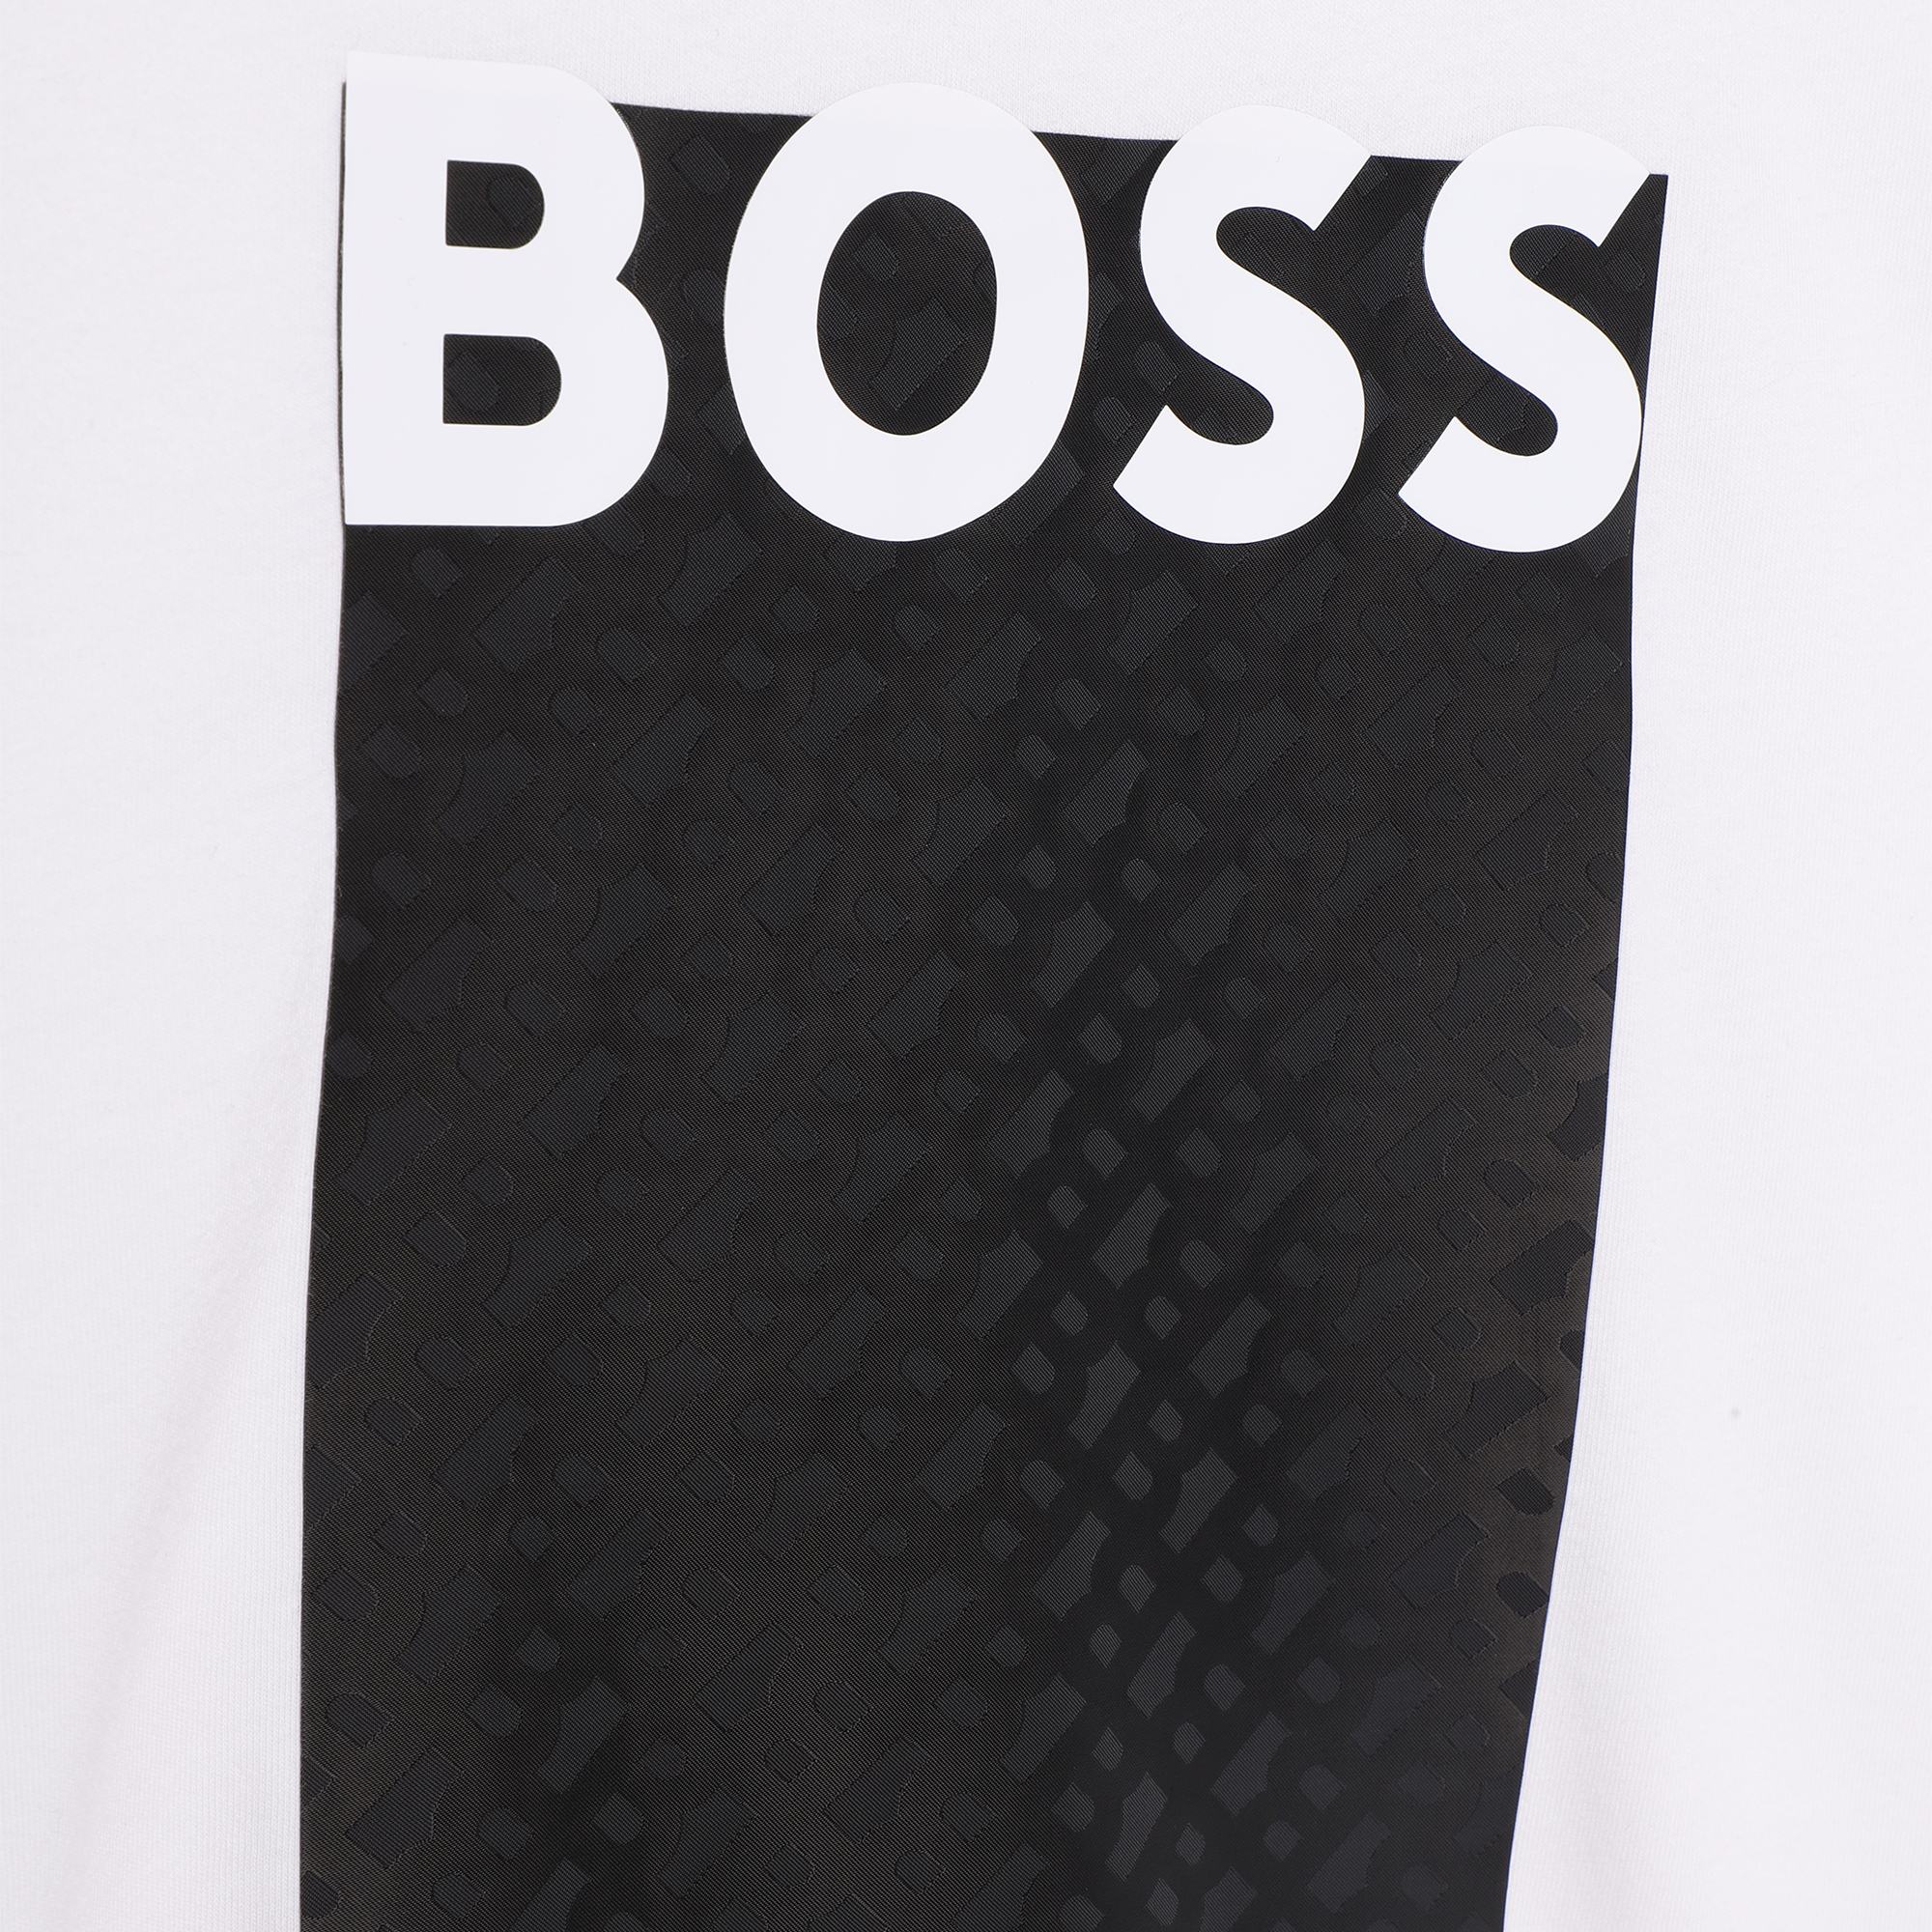 Long-sleeved t-shirt BOSS for BOY